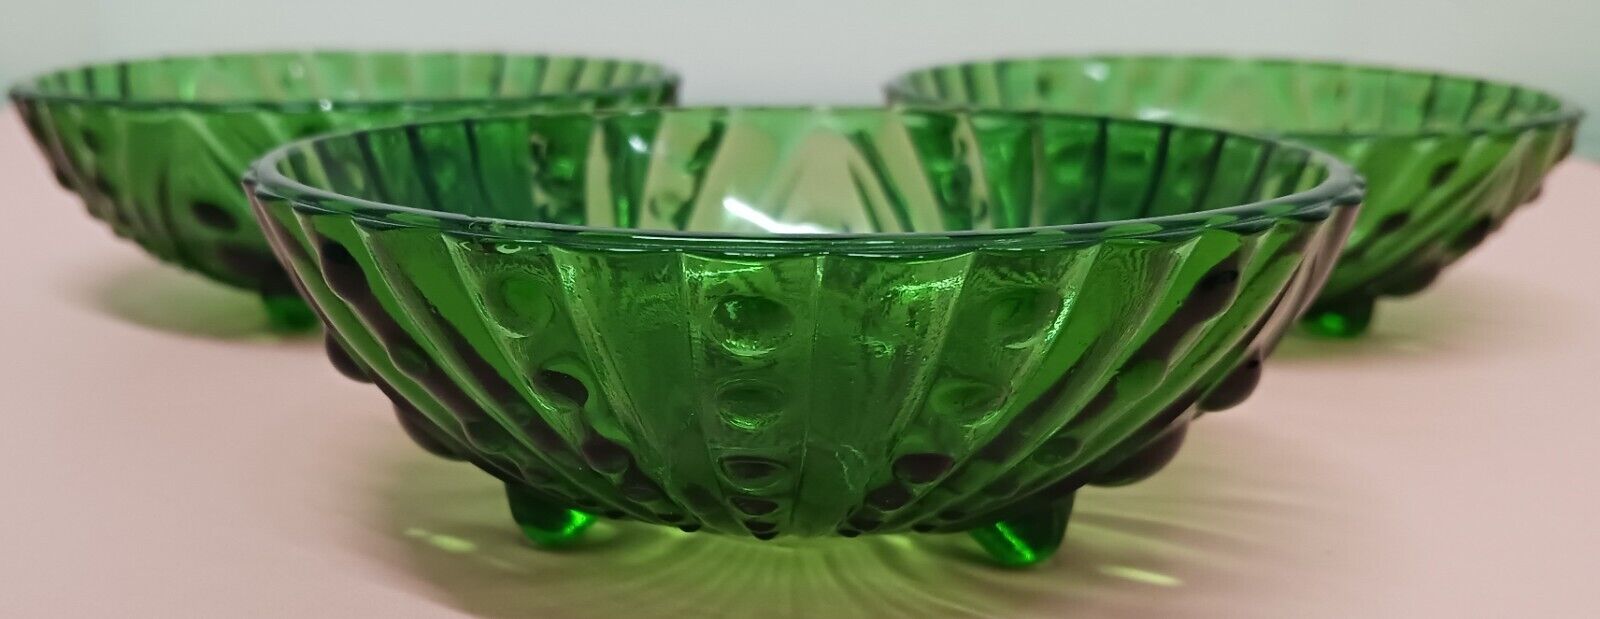 VTG ANCHOR HOCKING BURPLE INSPIRATION EMERALD GREEN GLASS DESSERT BOWL Lot of 3